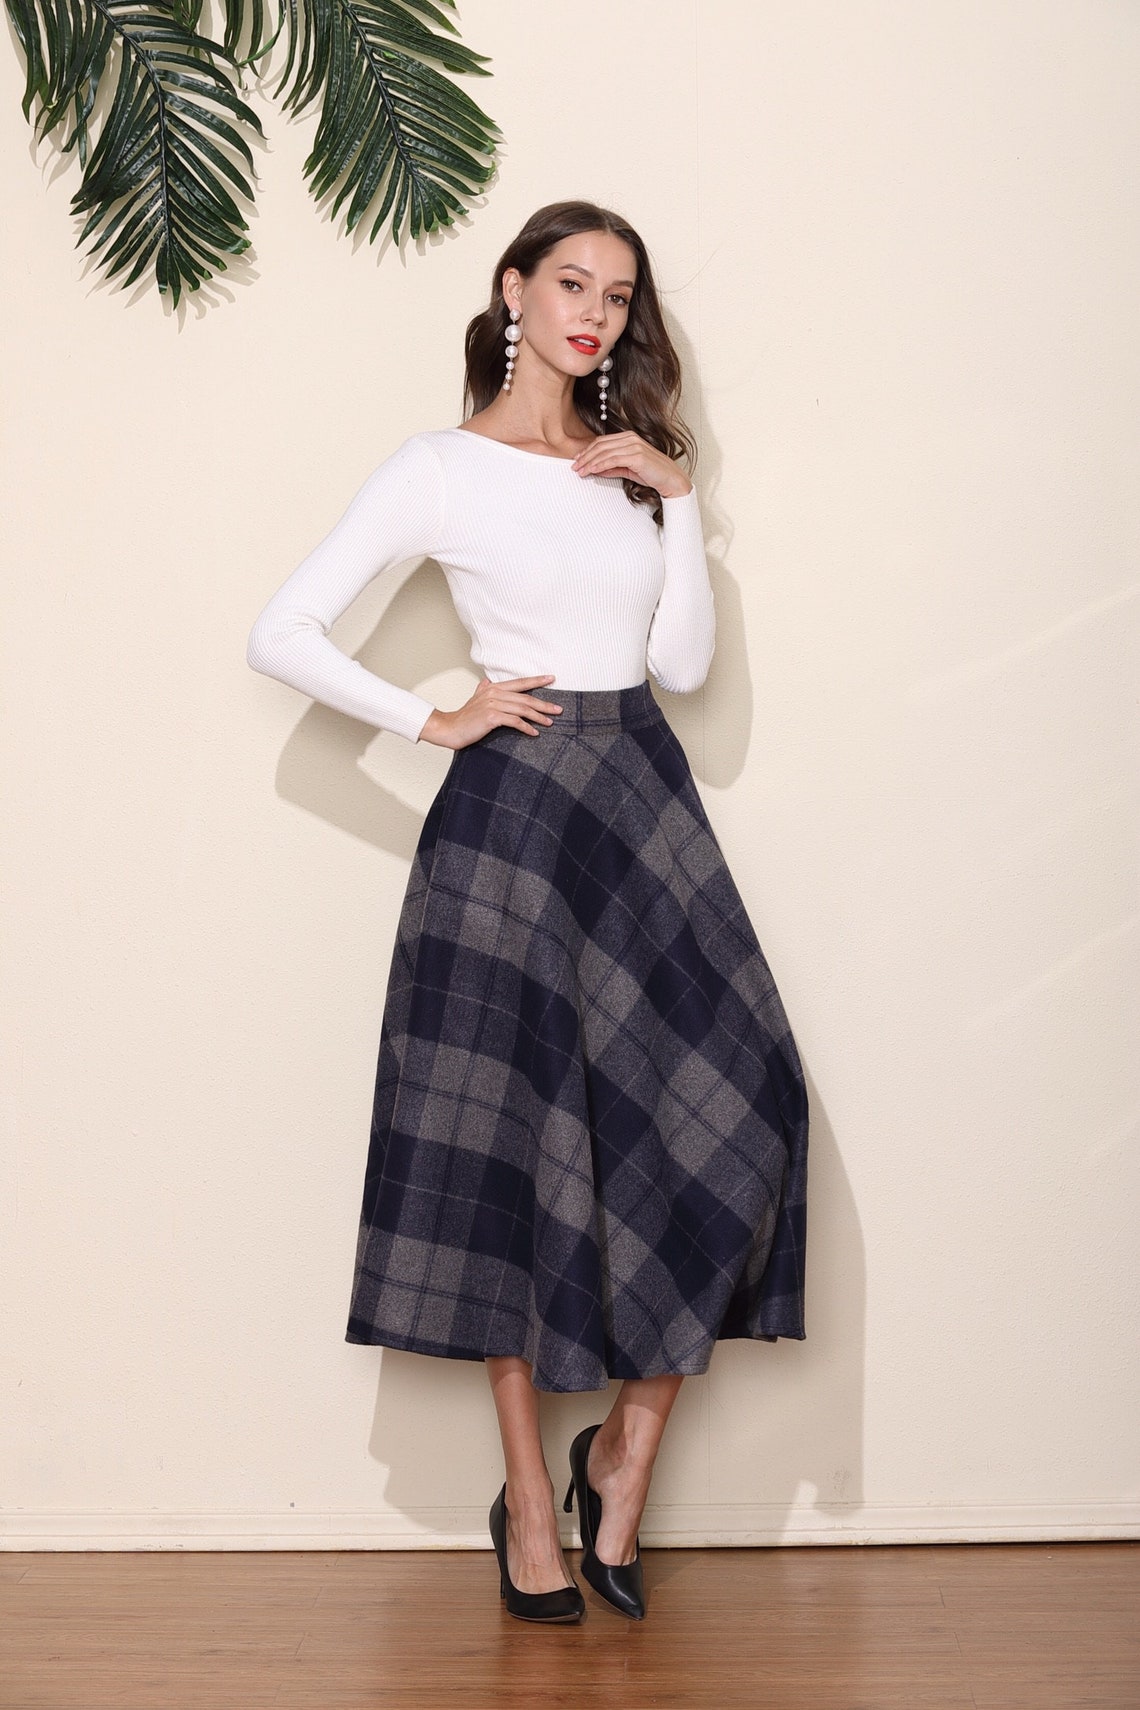 Grey Blue Grid Wool Skirt Long Woolen Wool Party Skirt Evening | Etsy